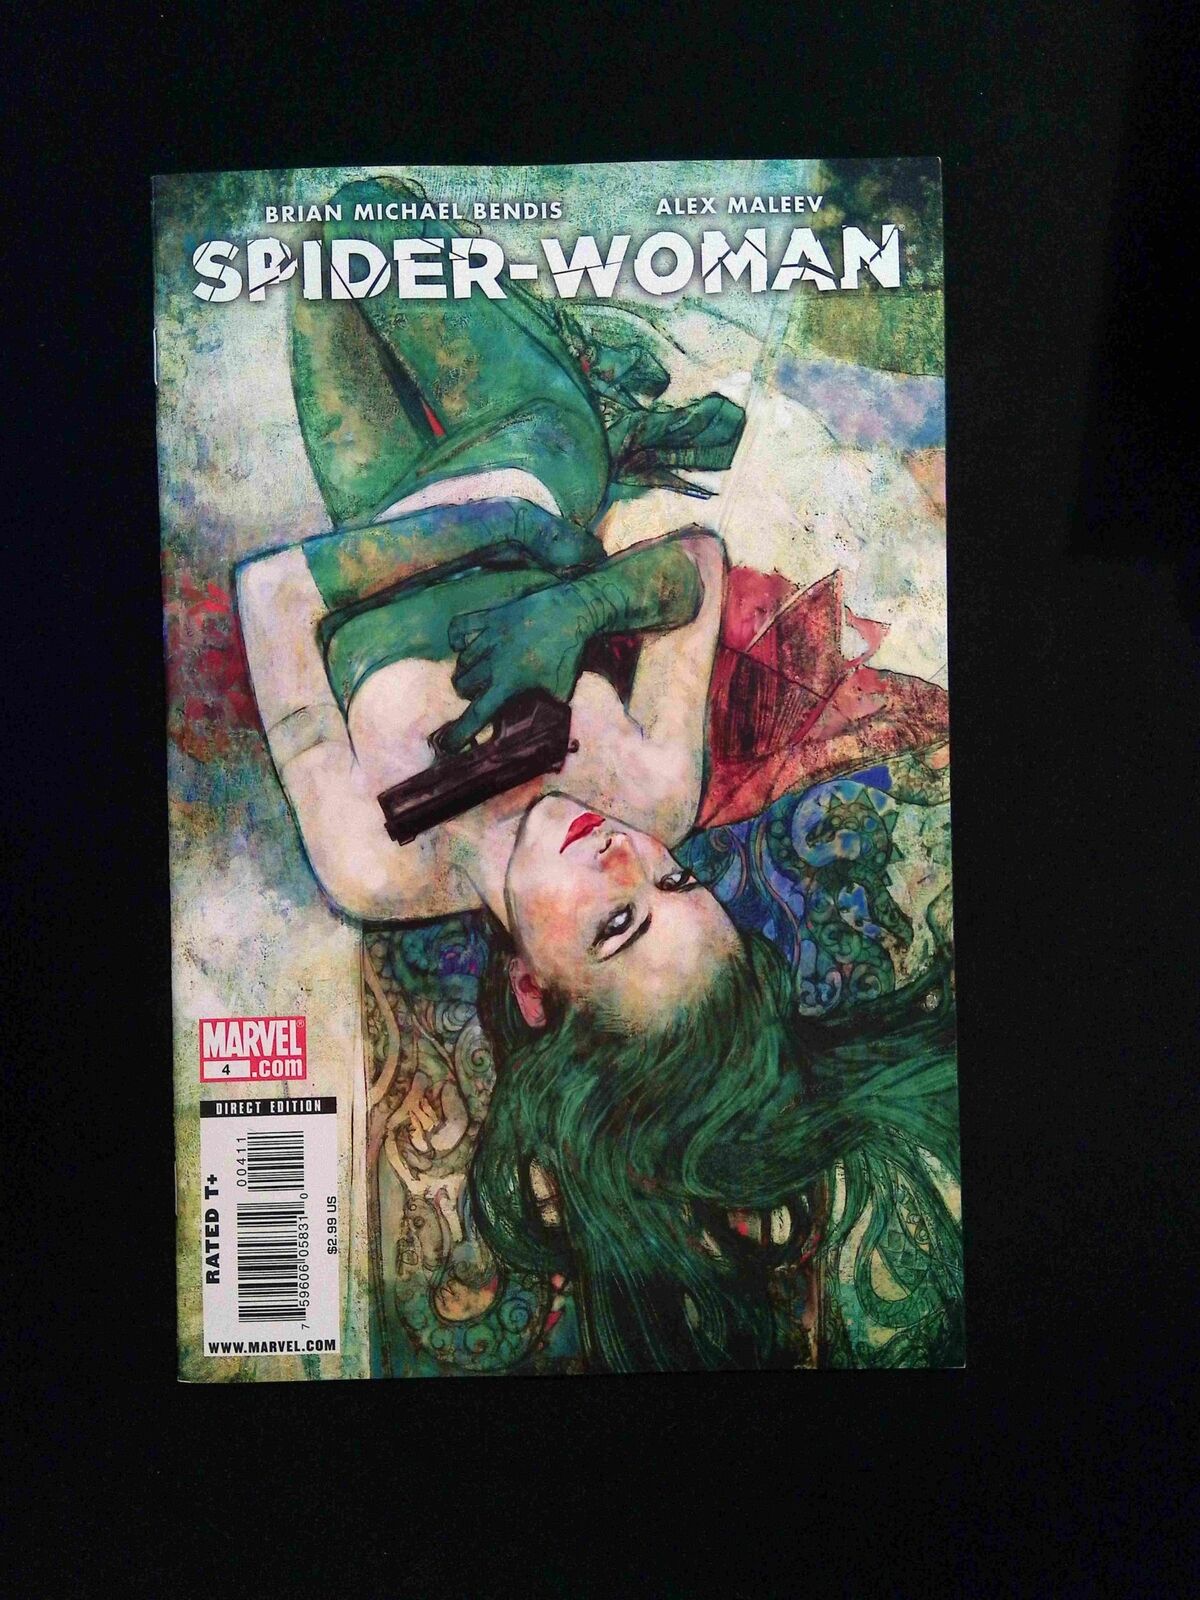 Spider-Woman #4 (4th Series) Marvel Comics 2009 VF/NM